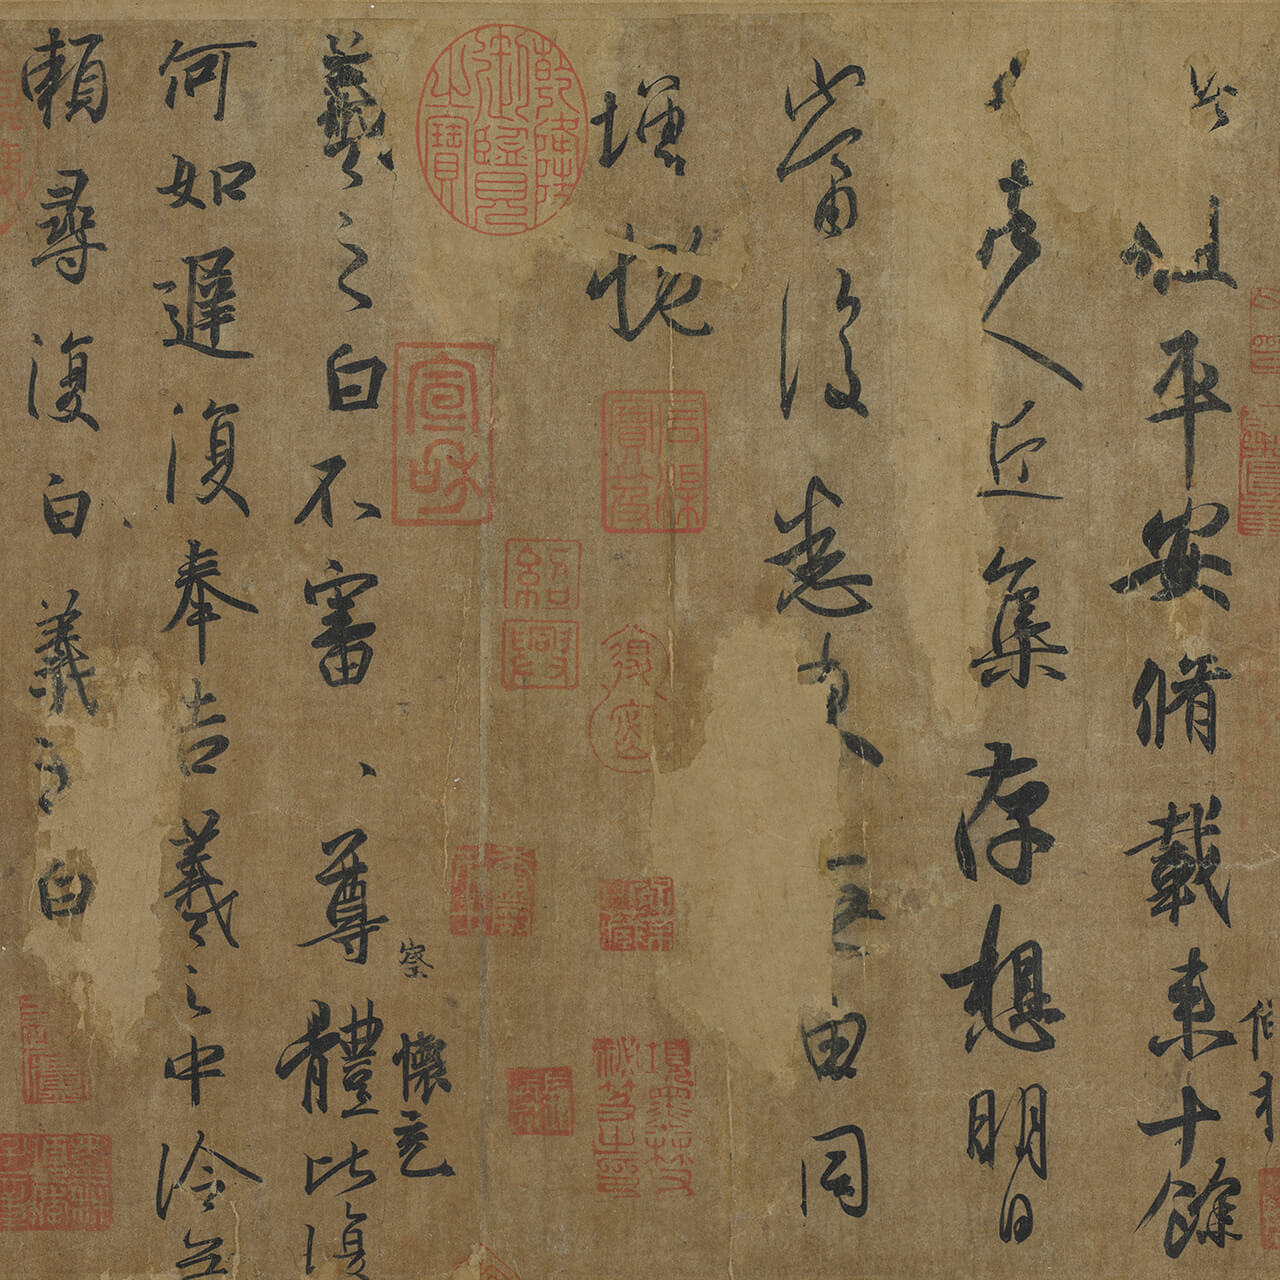 Three Passages: Ping'an, Heru, and Fengju